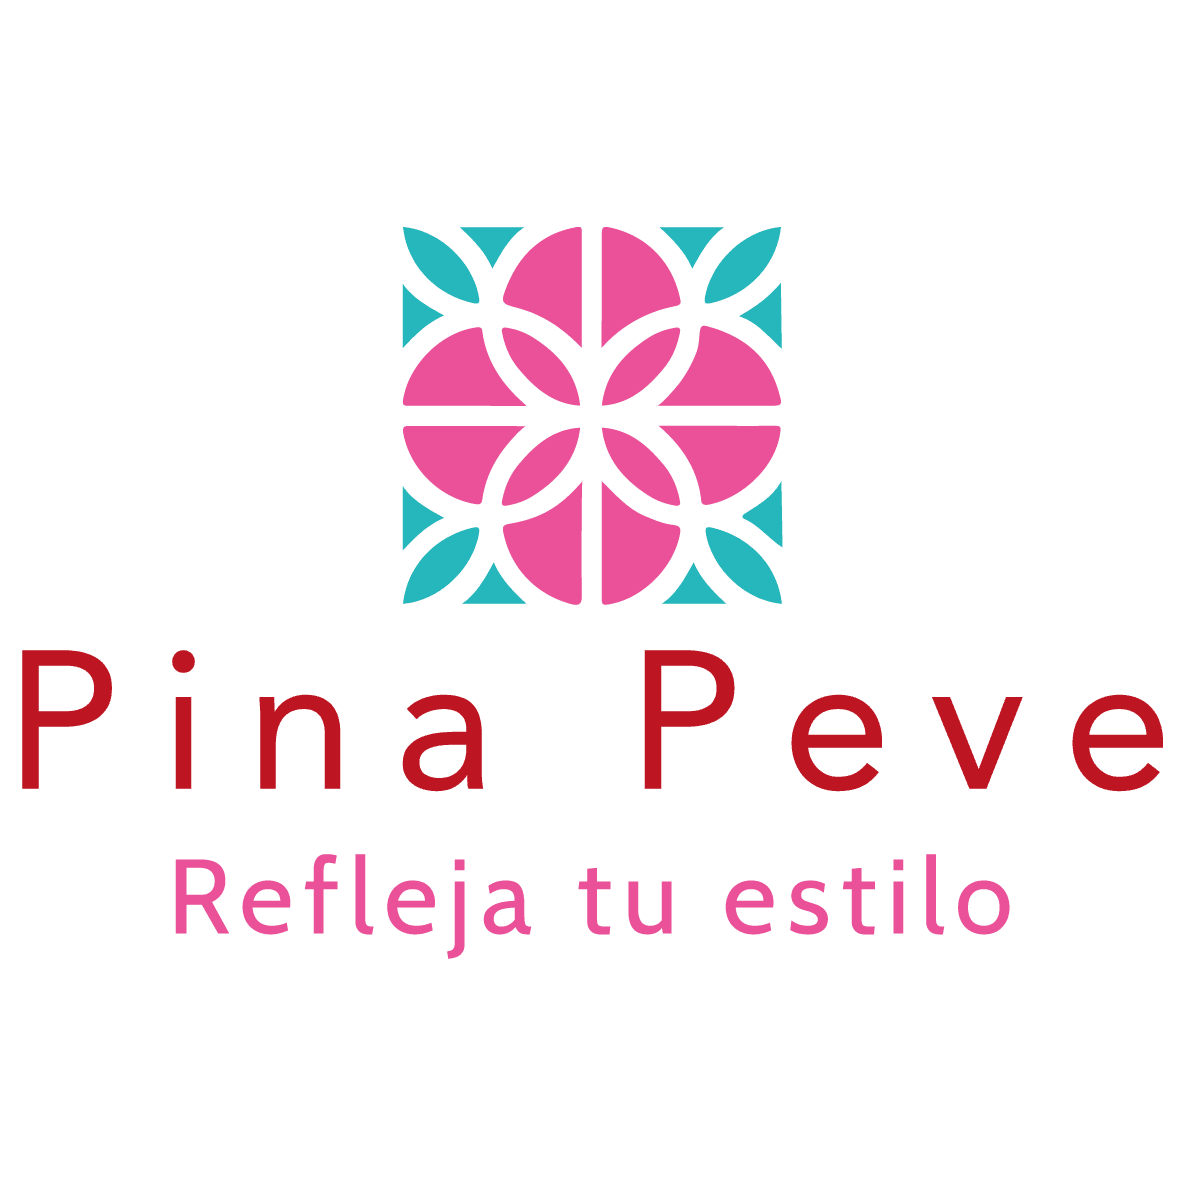 Pina Peve